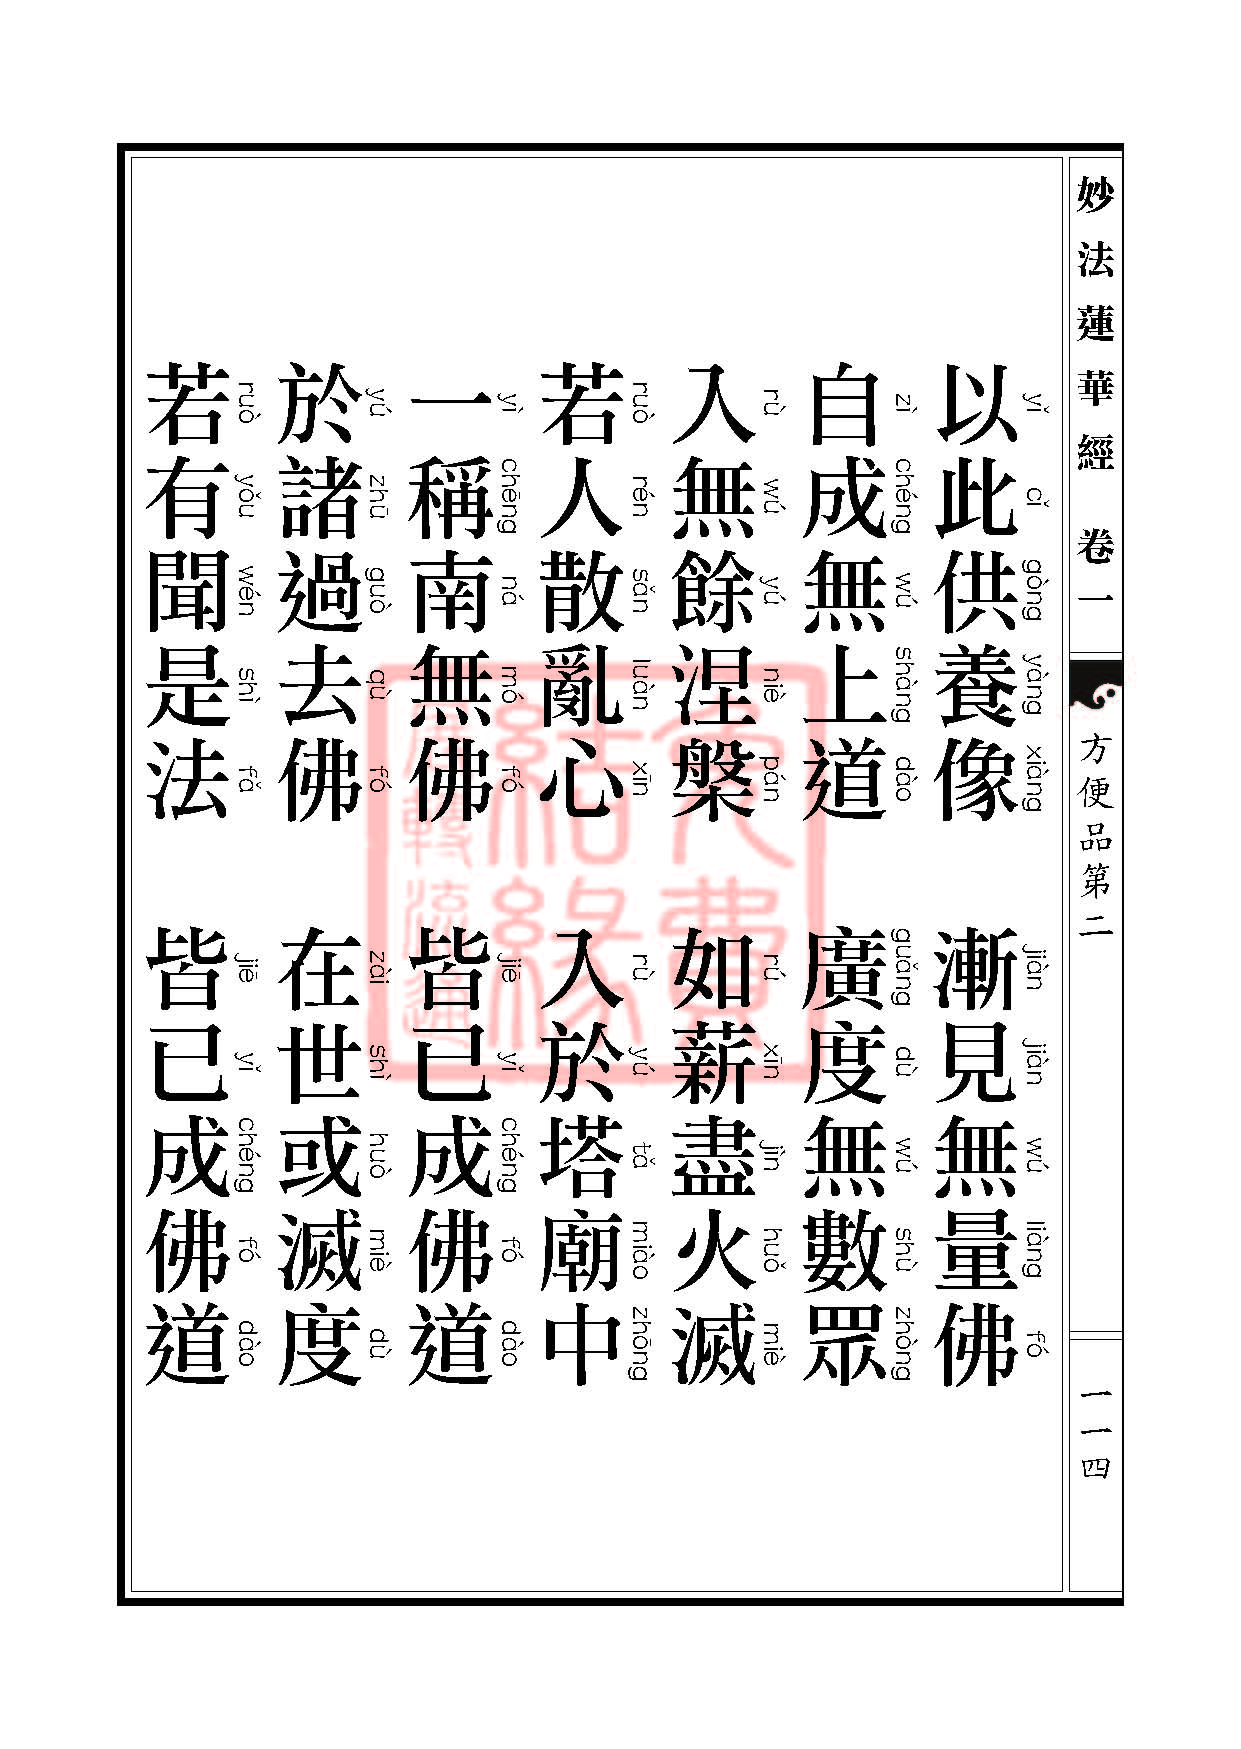 Book_FHJ_HK-A6-PY_Web_页面_114.jpg